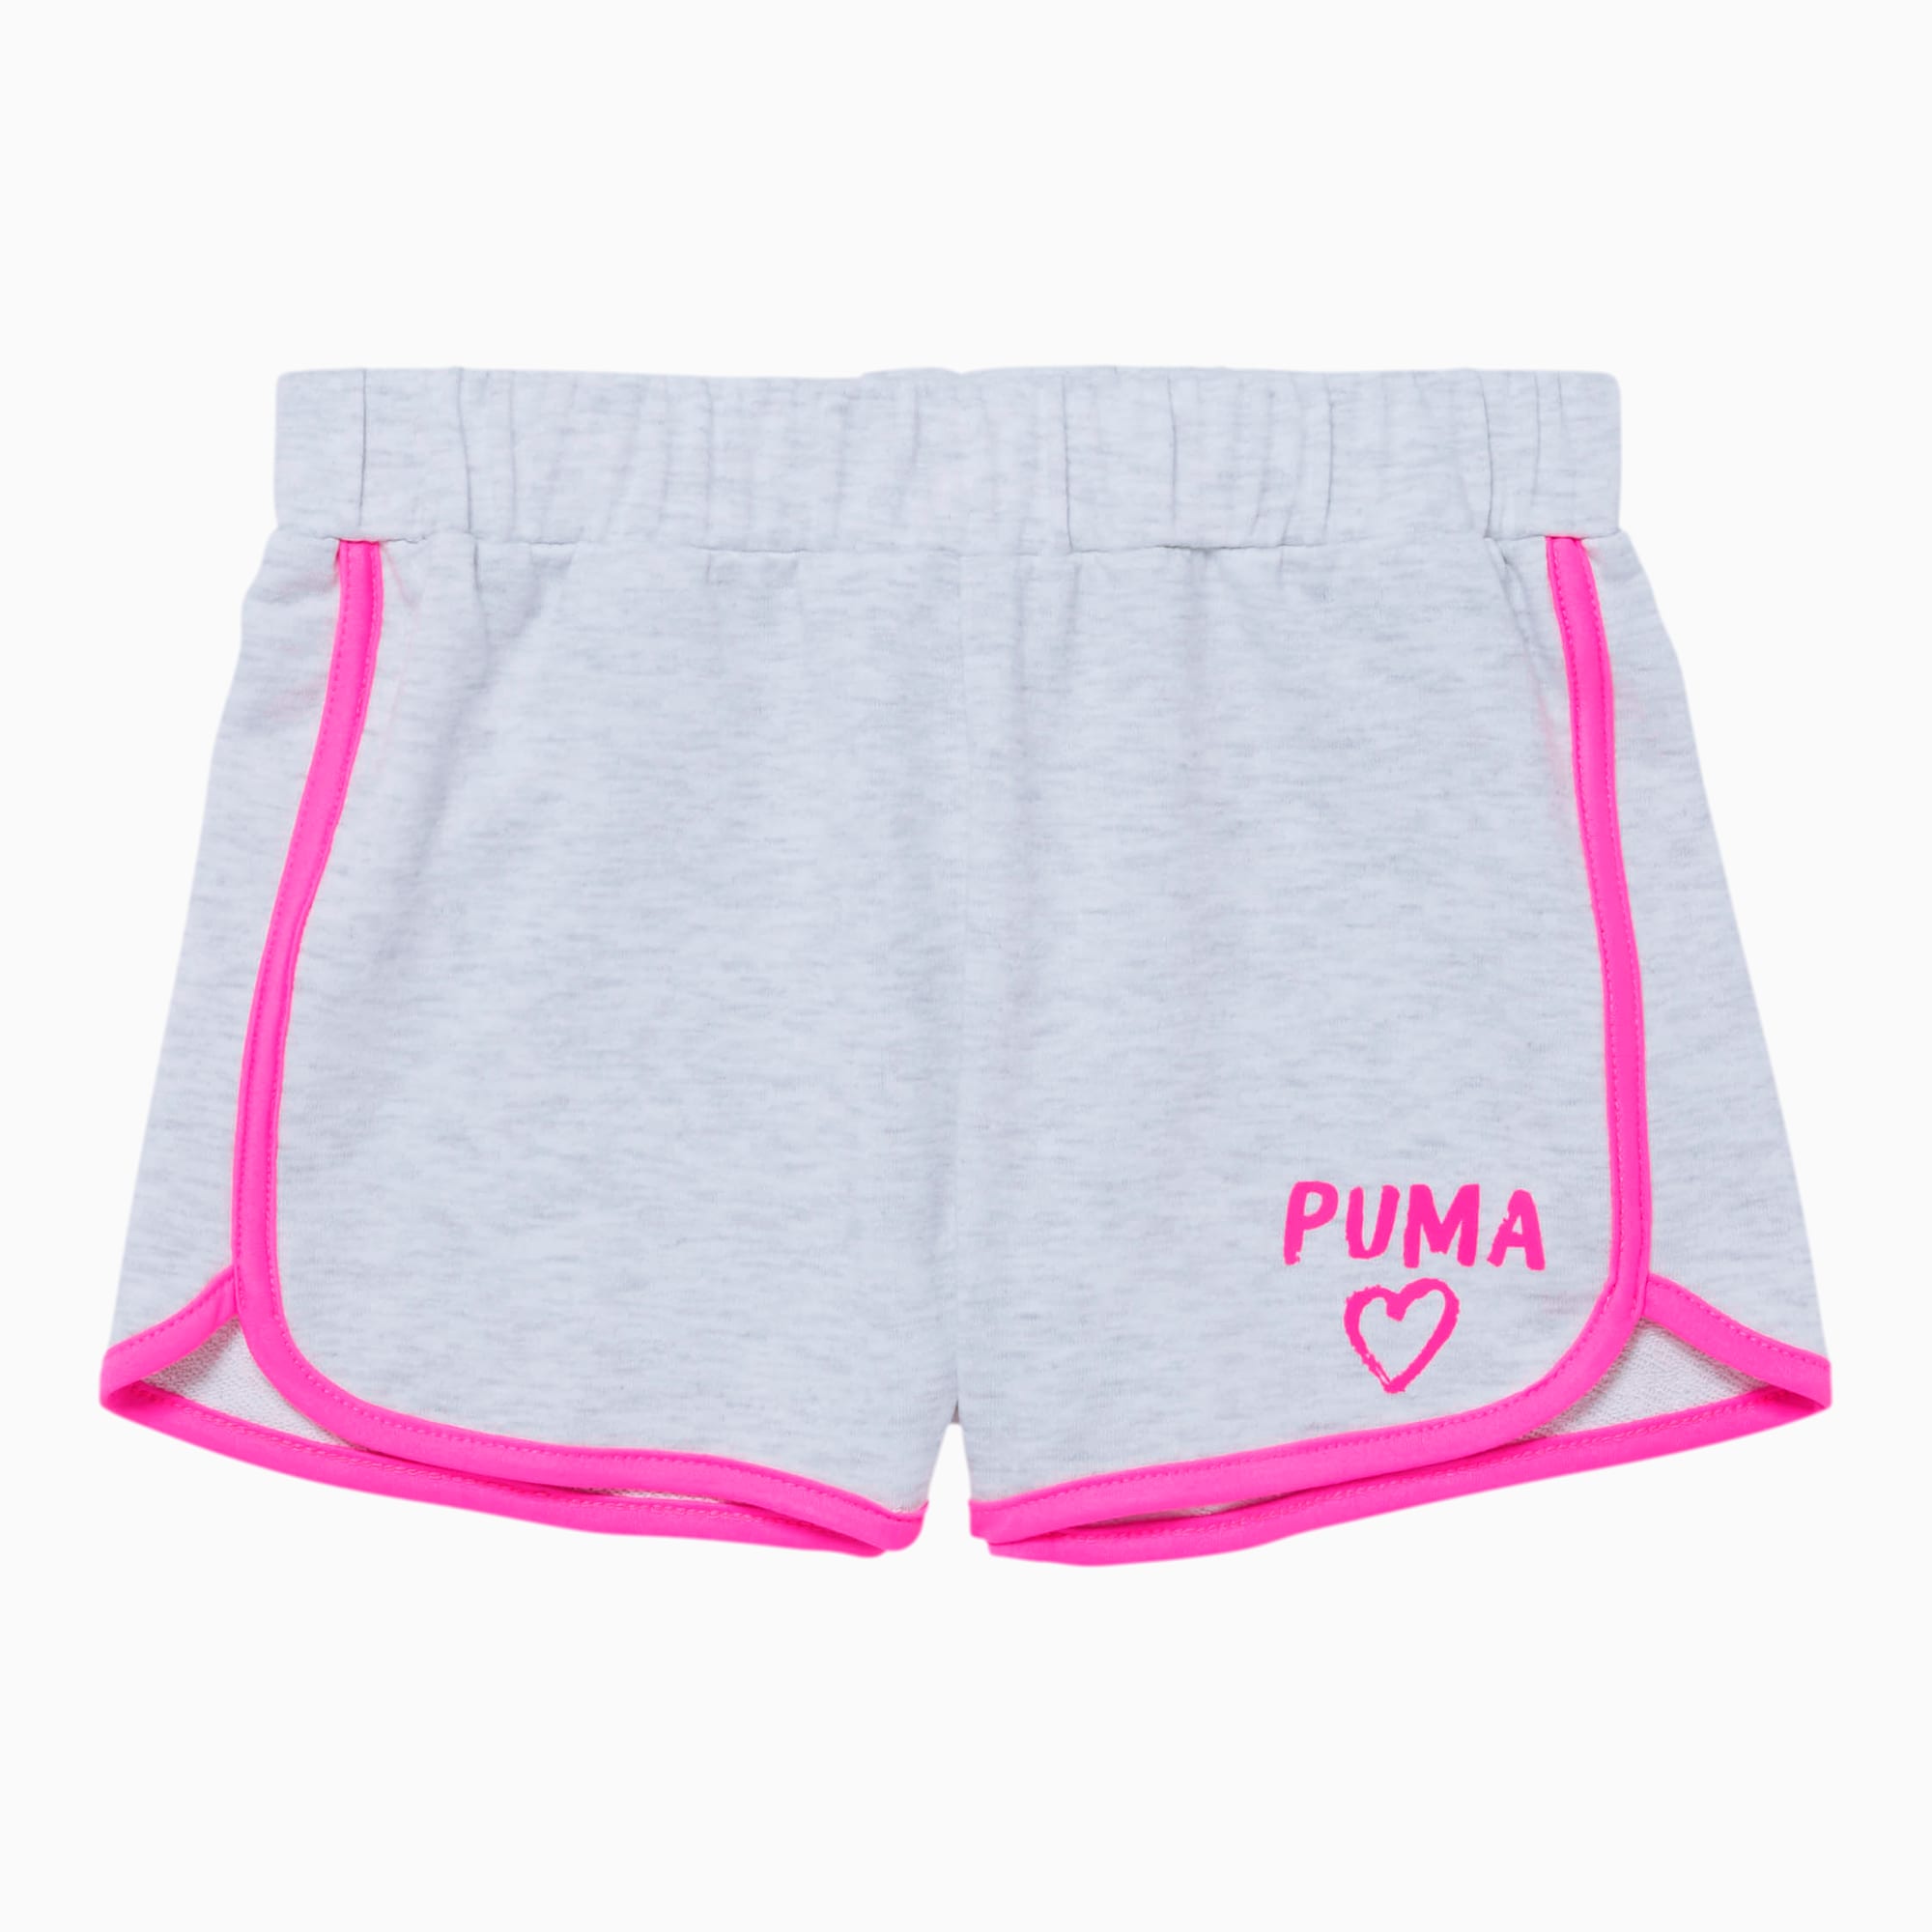 puma girls shorts